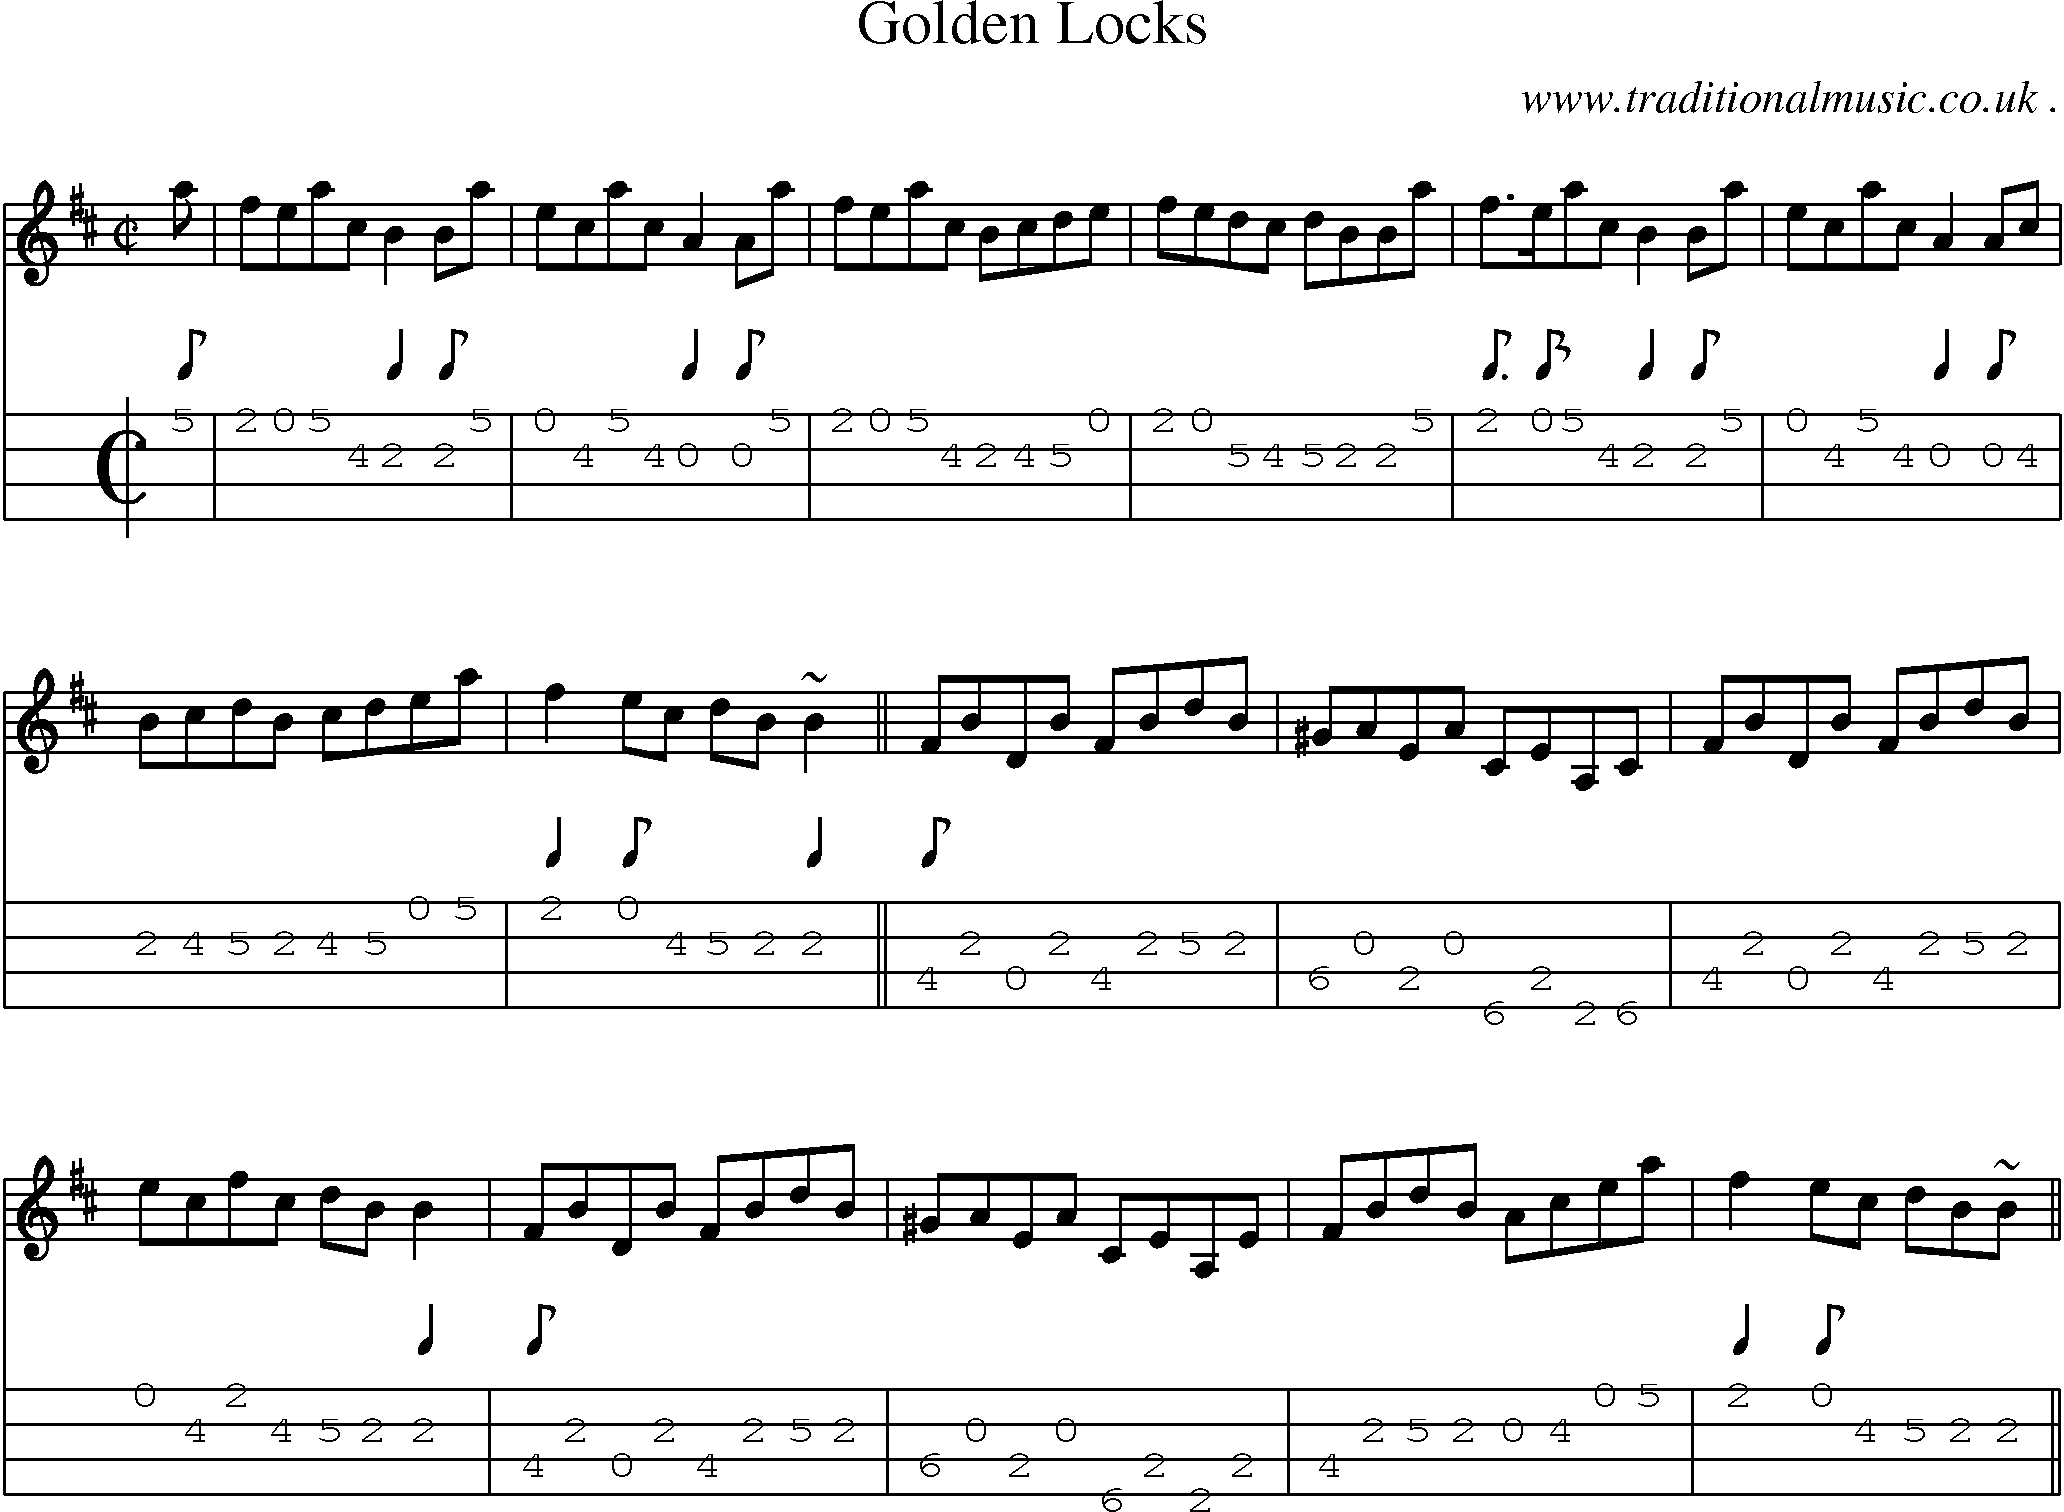 Sheet-music  score, Chords and Mandolin Tabs for Golden Locks